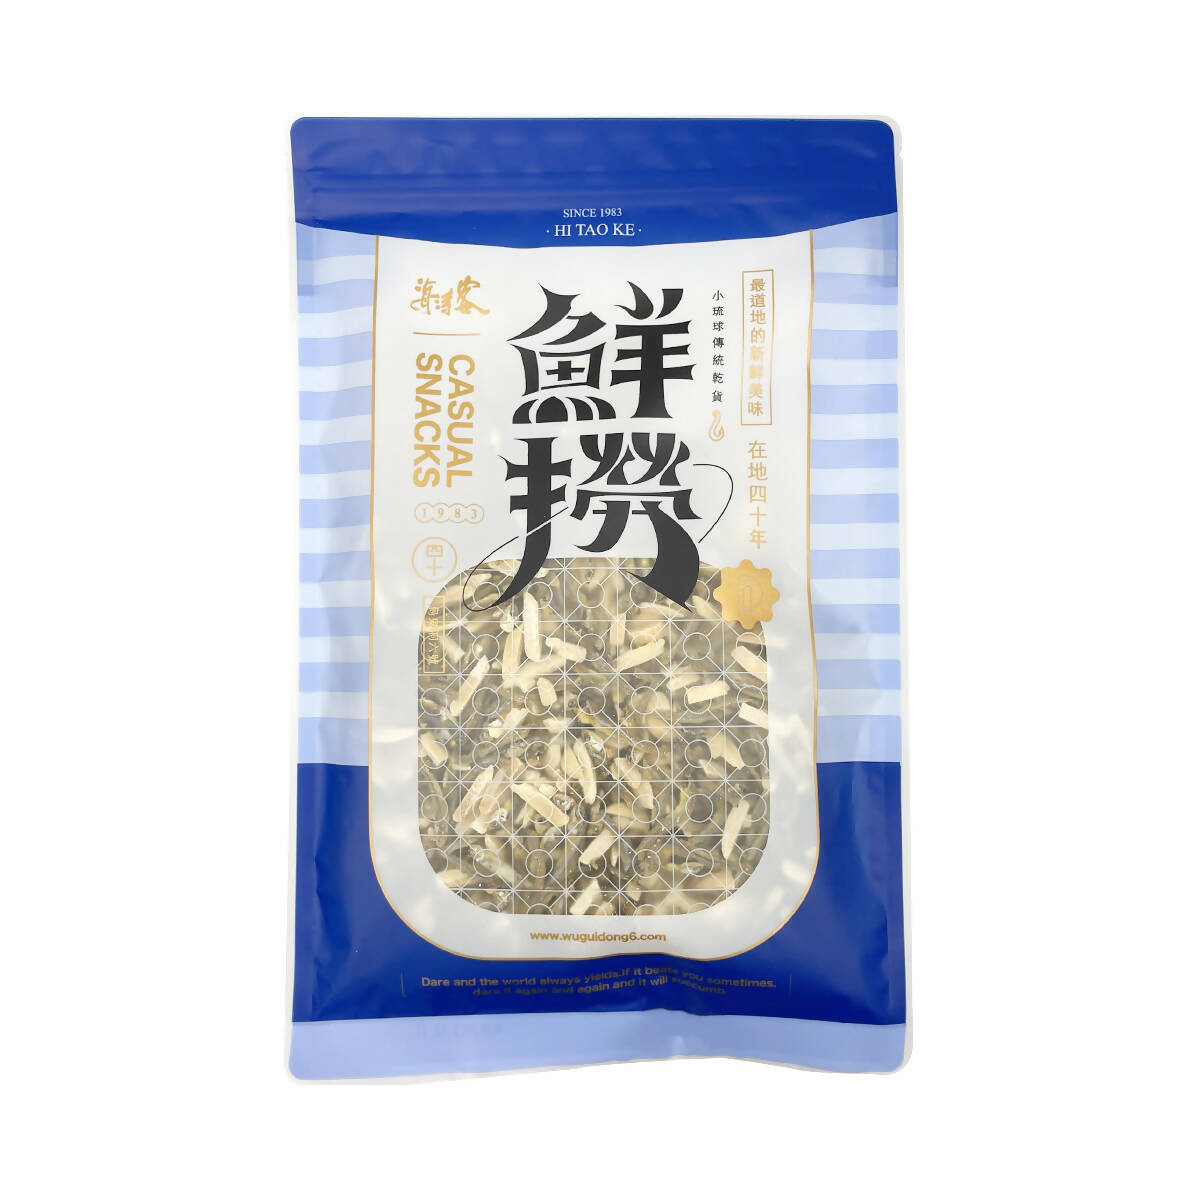 Taiwan direct mail【Haitaoke】 HAITAOKE Almond Clove 180g(Expiration Date:2022/10/20) 